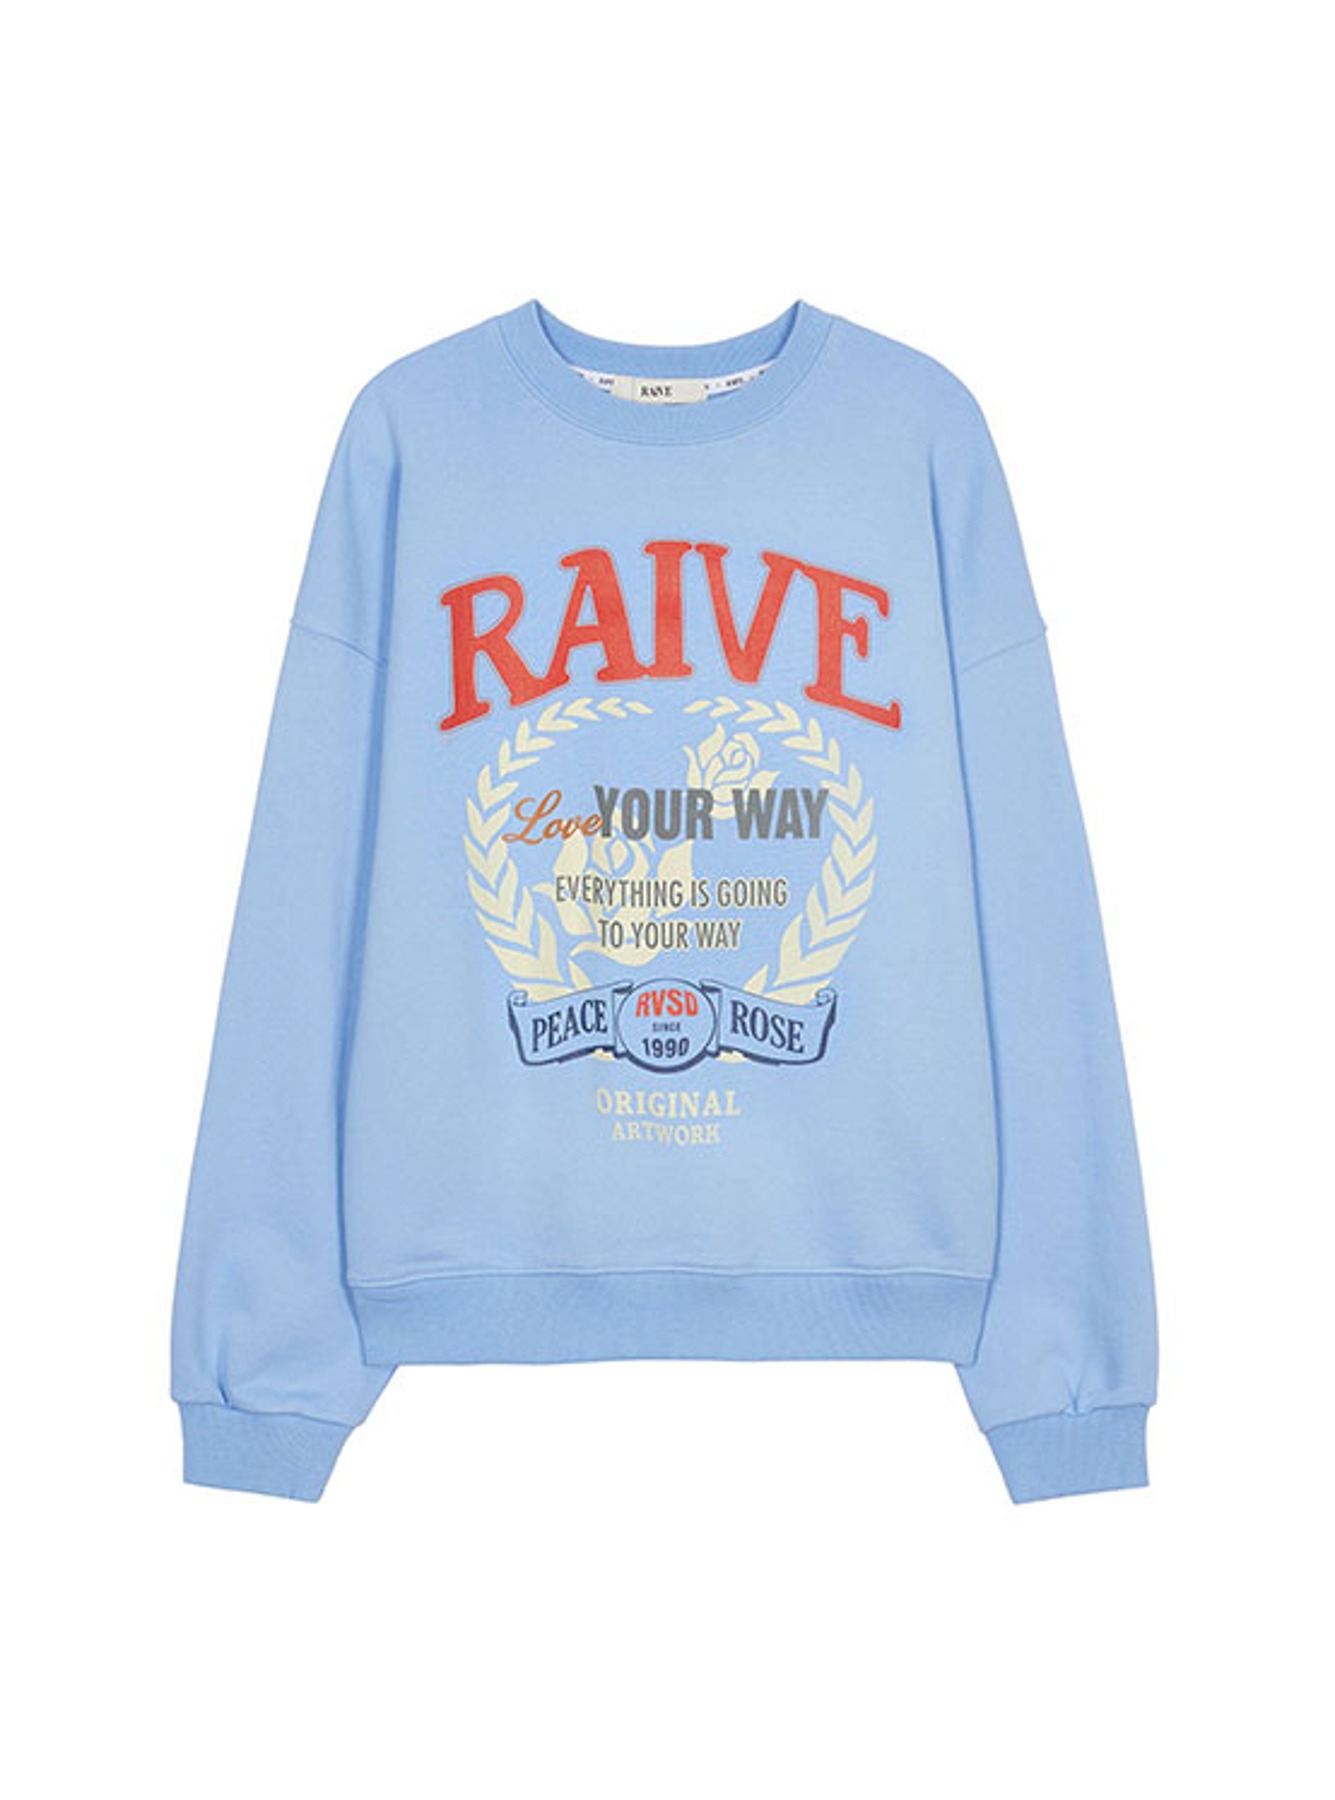 RAIVE Artwork Sweatshirt in Blue VW3SE253-22